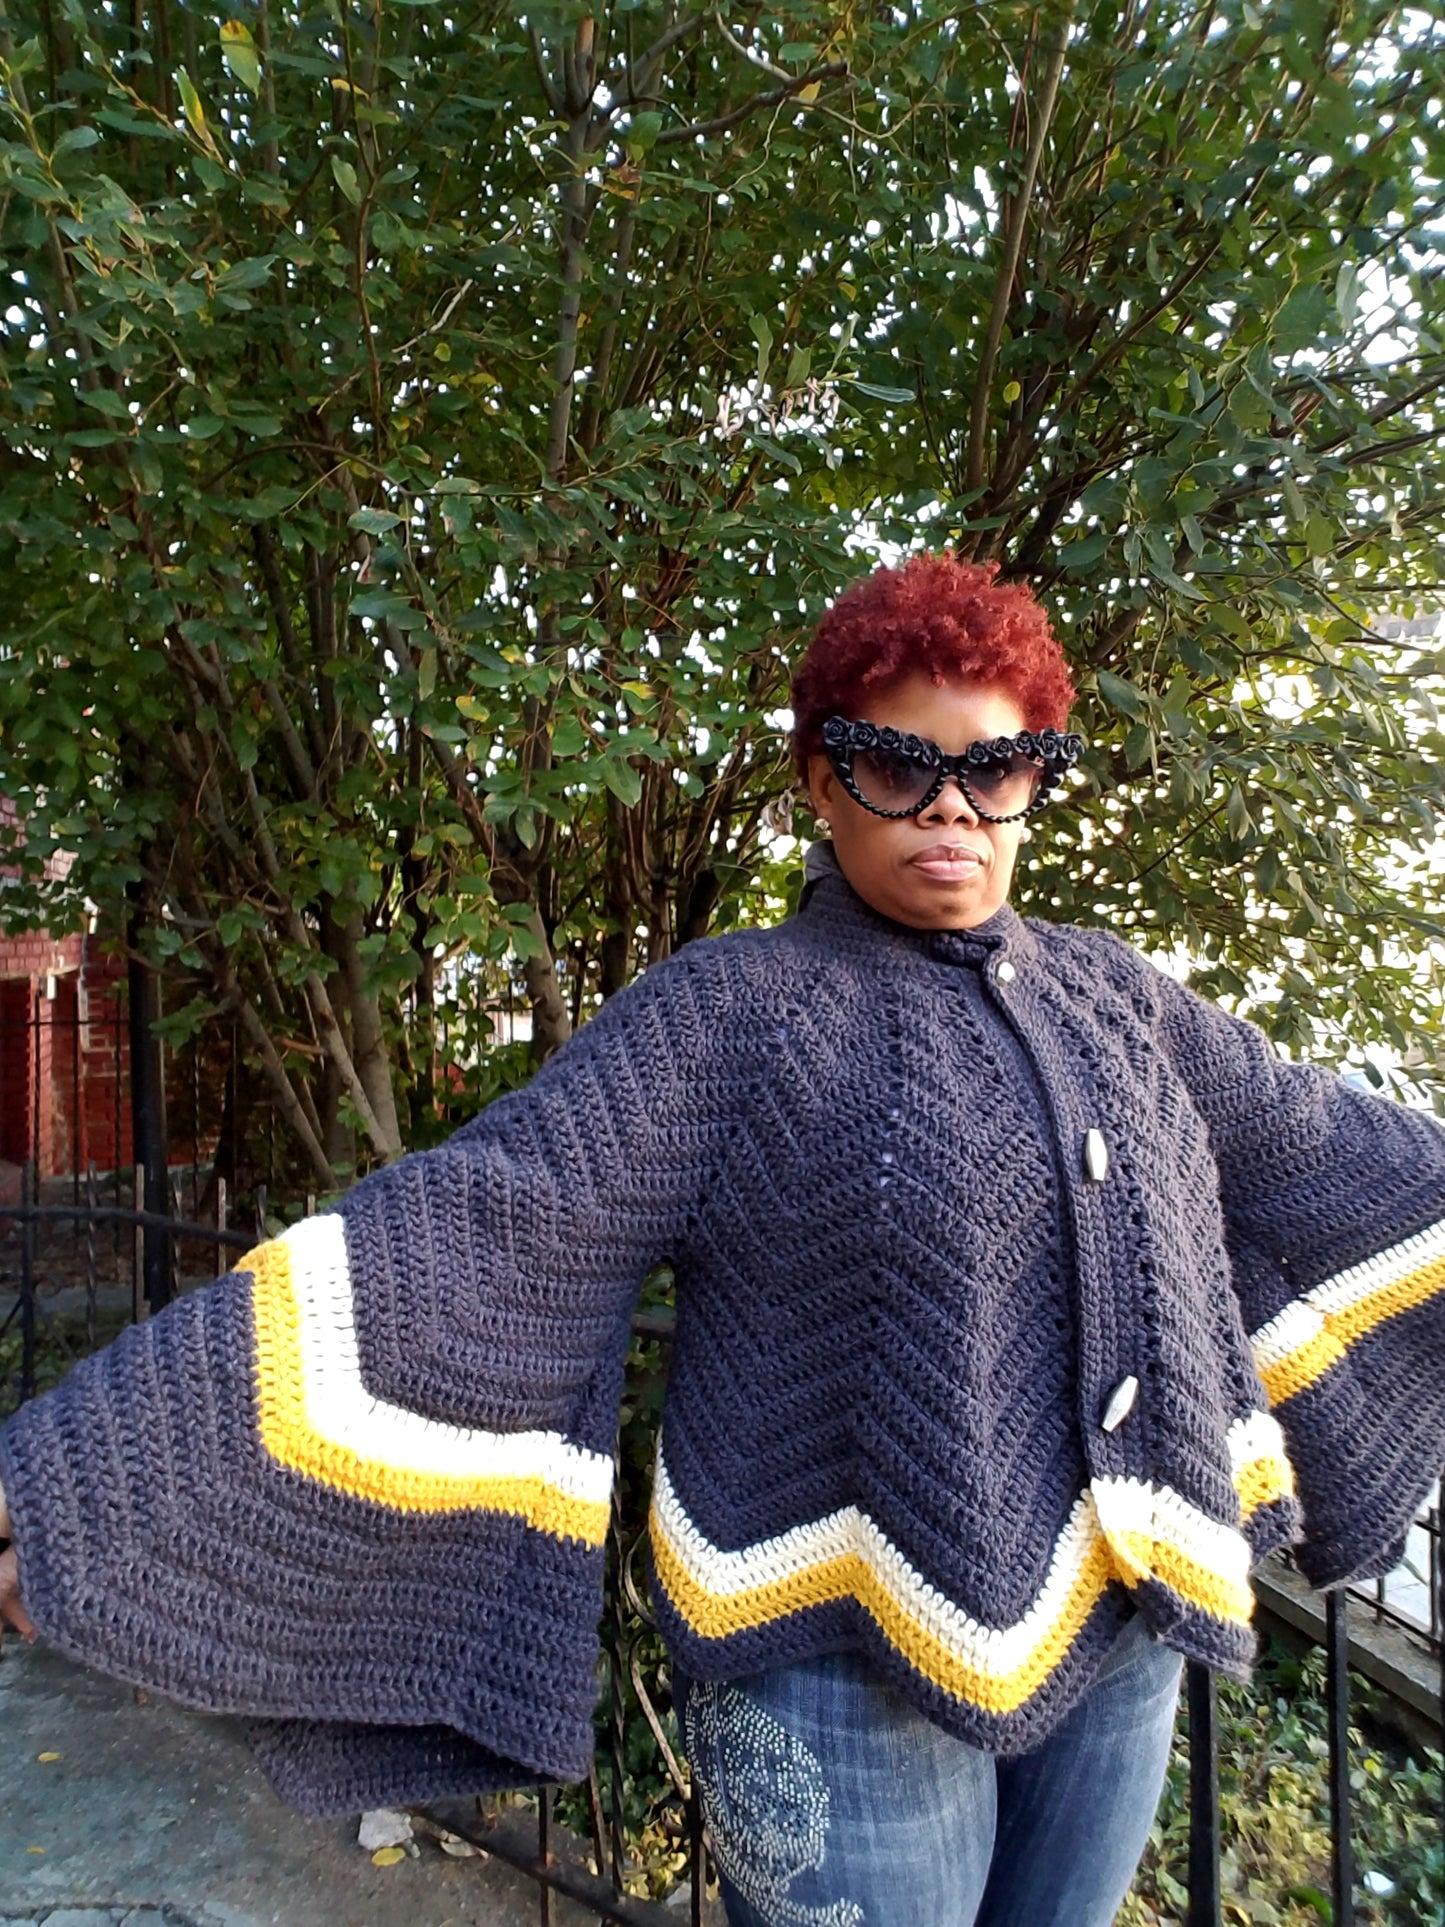 The Crochet Cape Sleeve Jacket